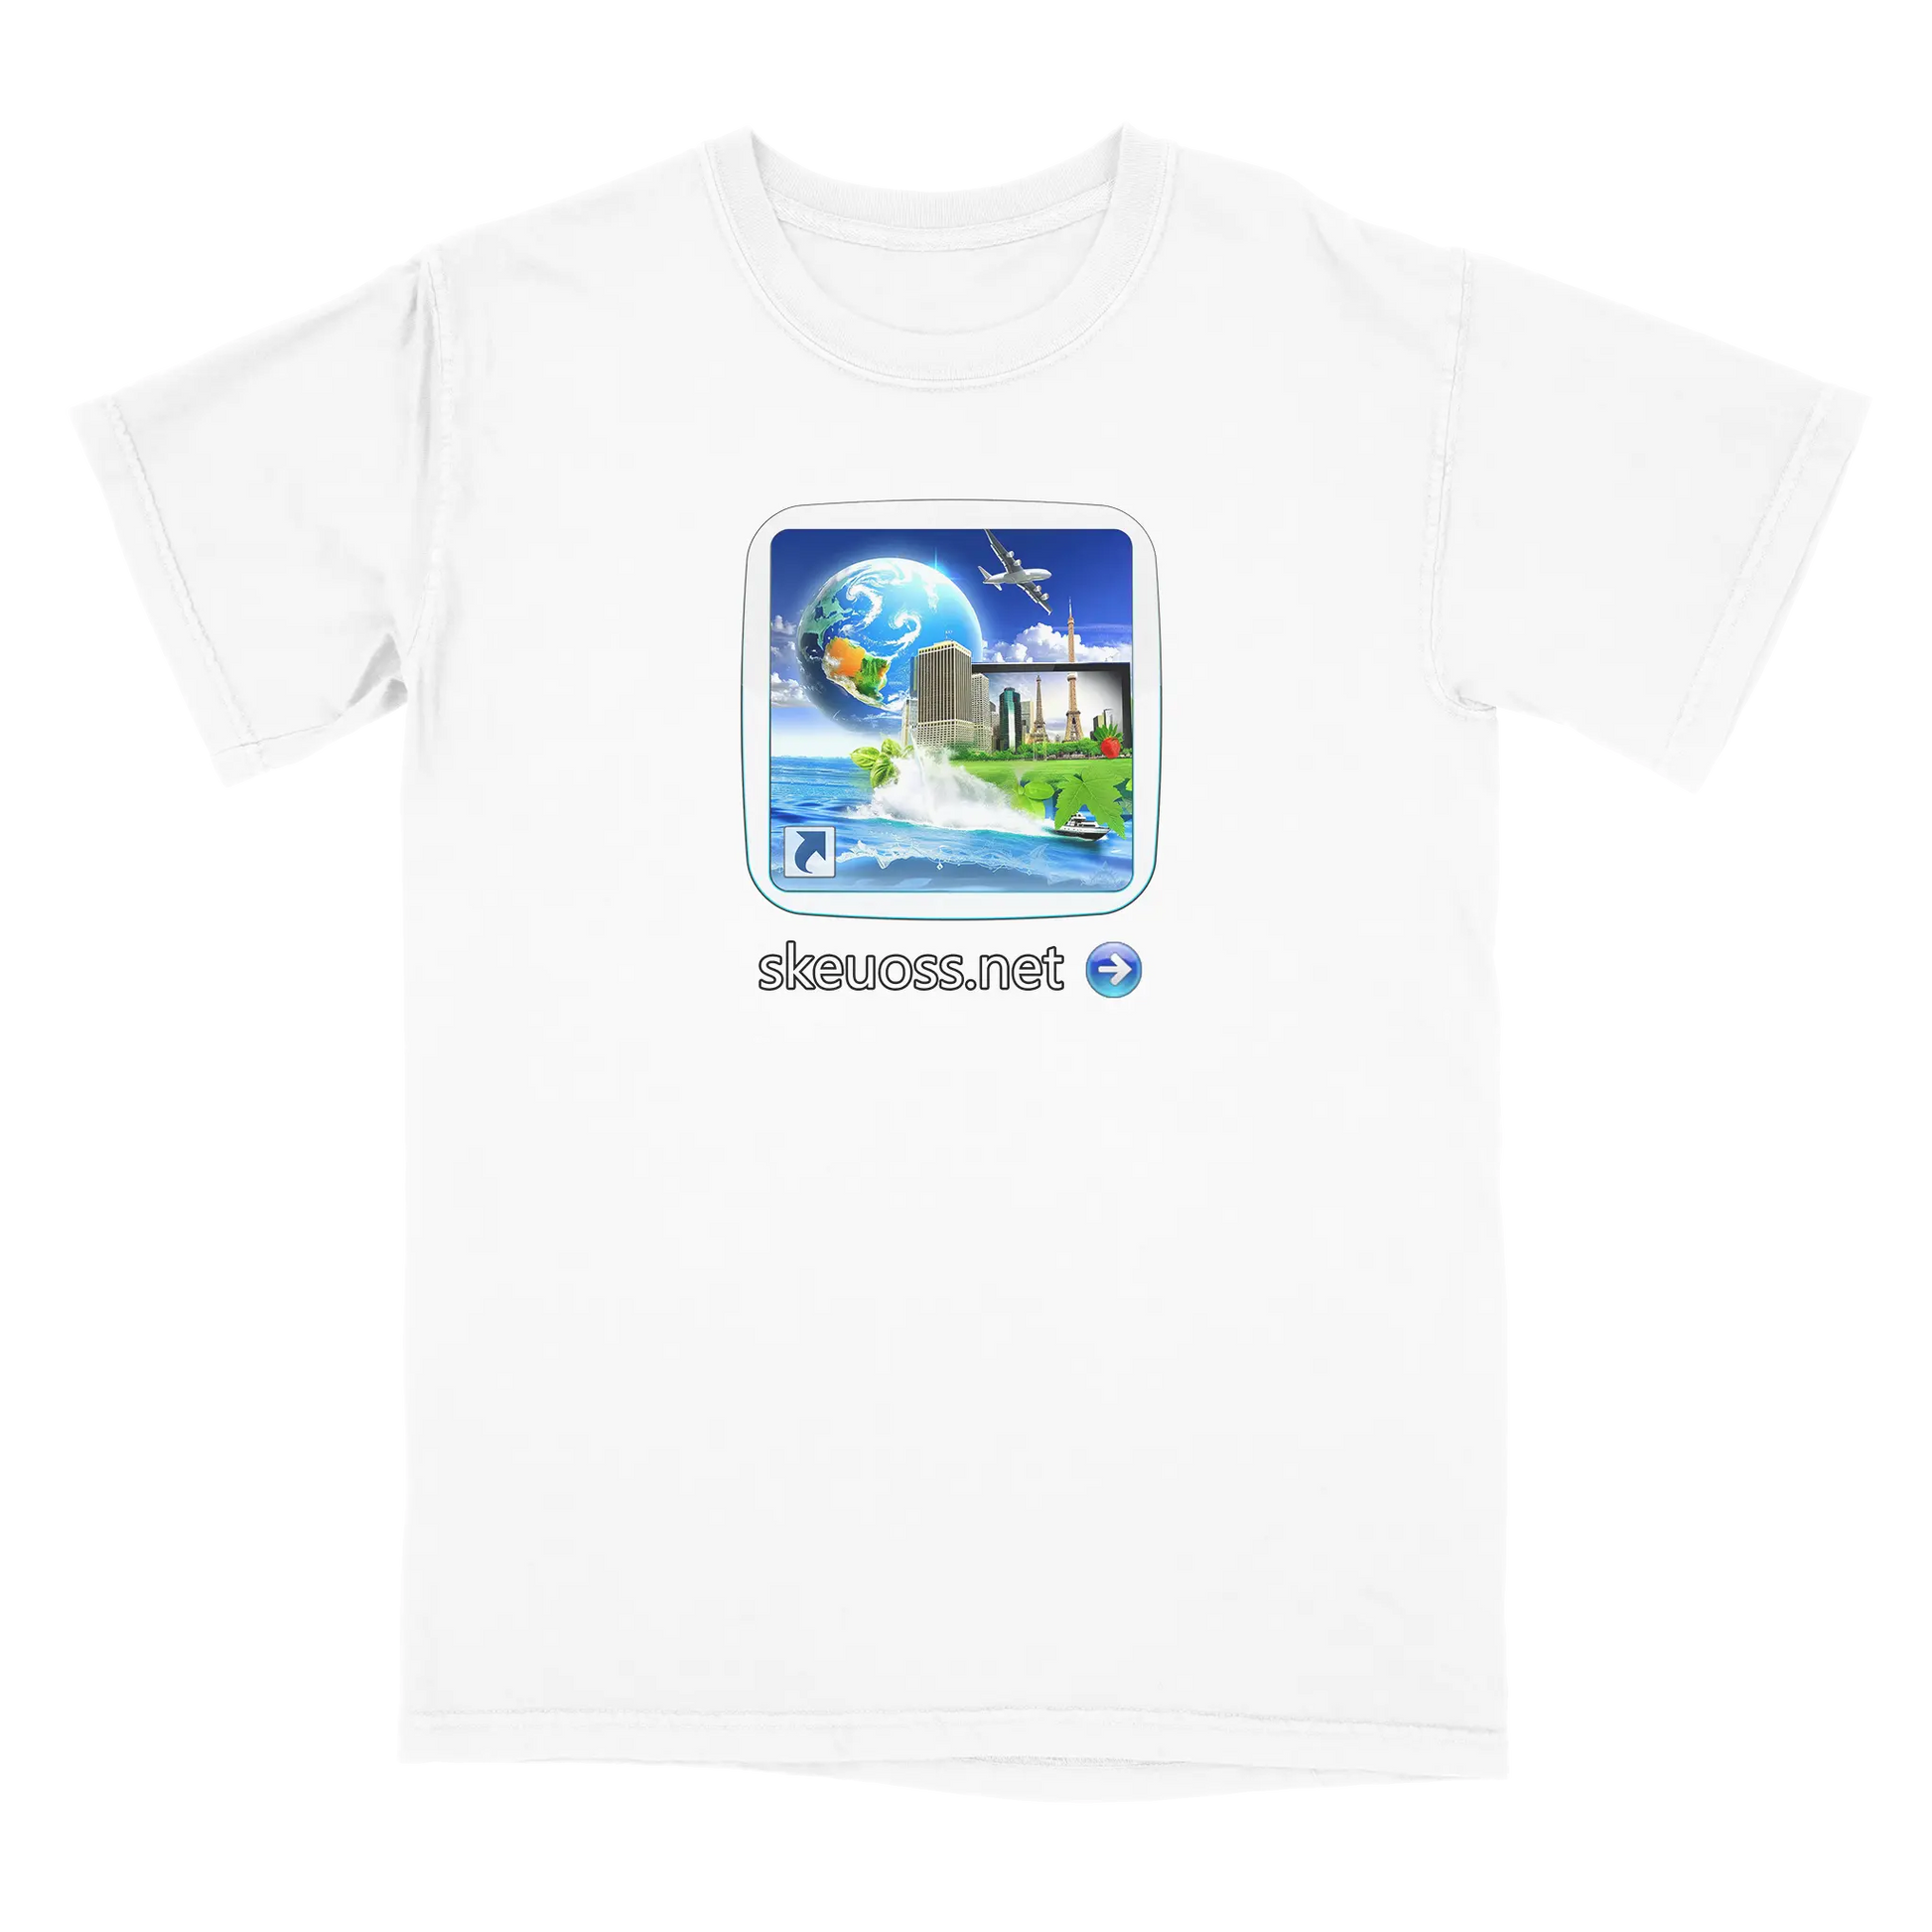 Frutiger Aero T-shirt - User Login Collection - User 176